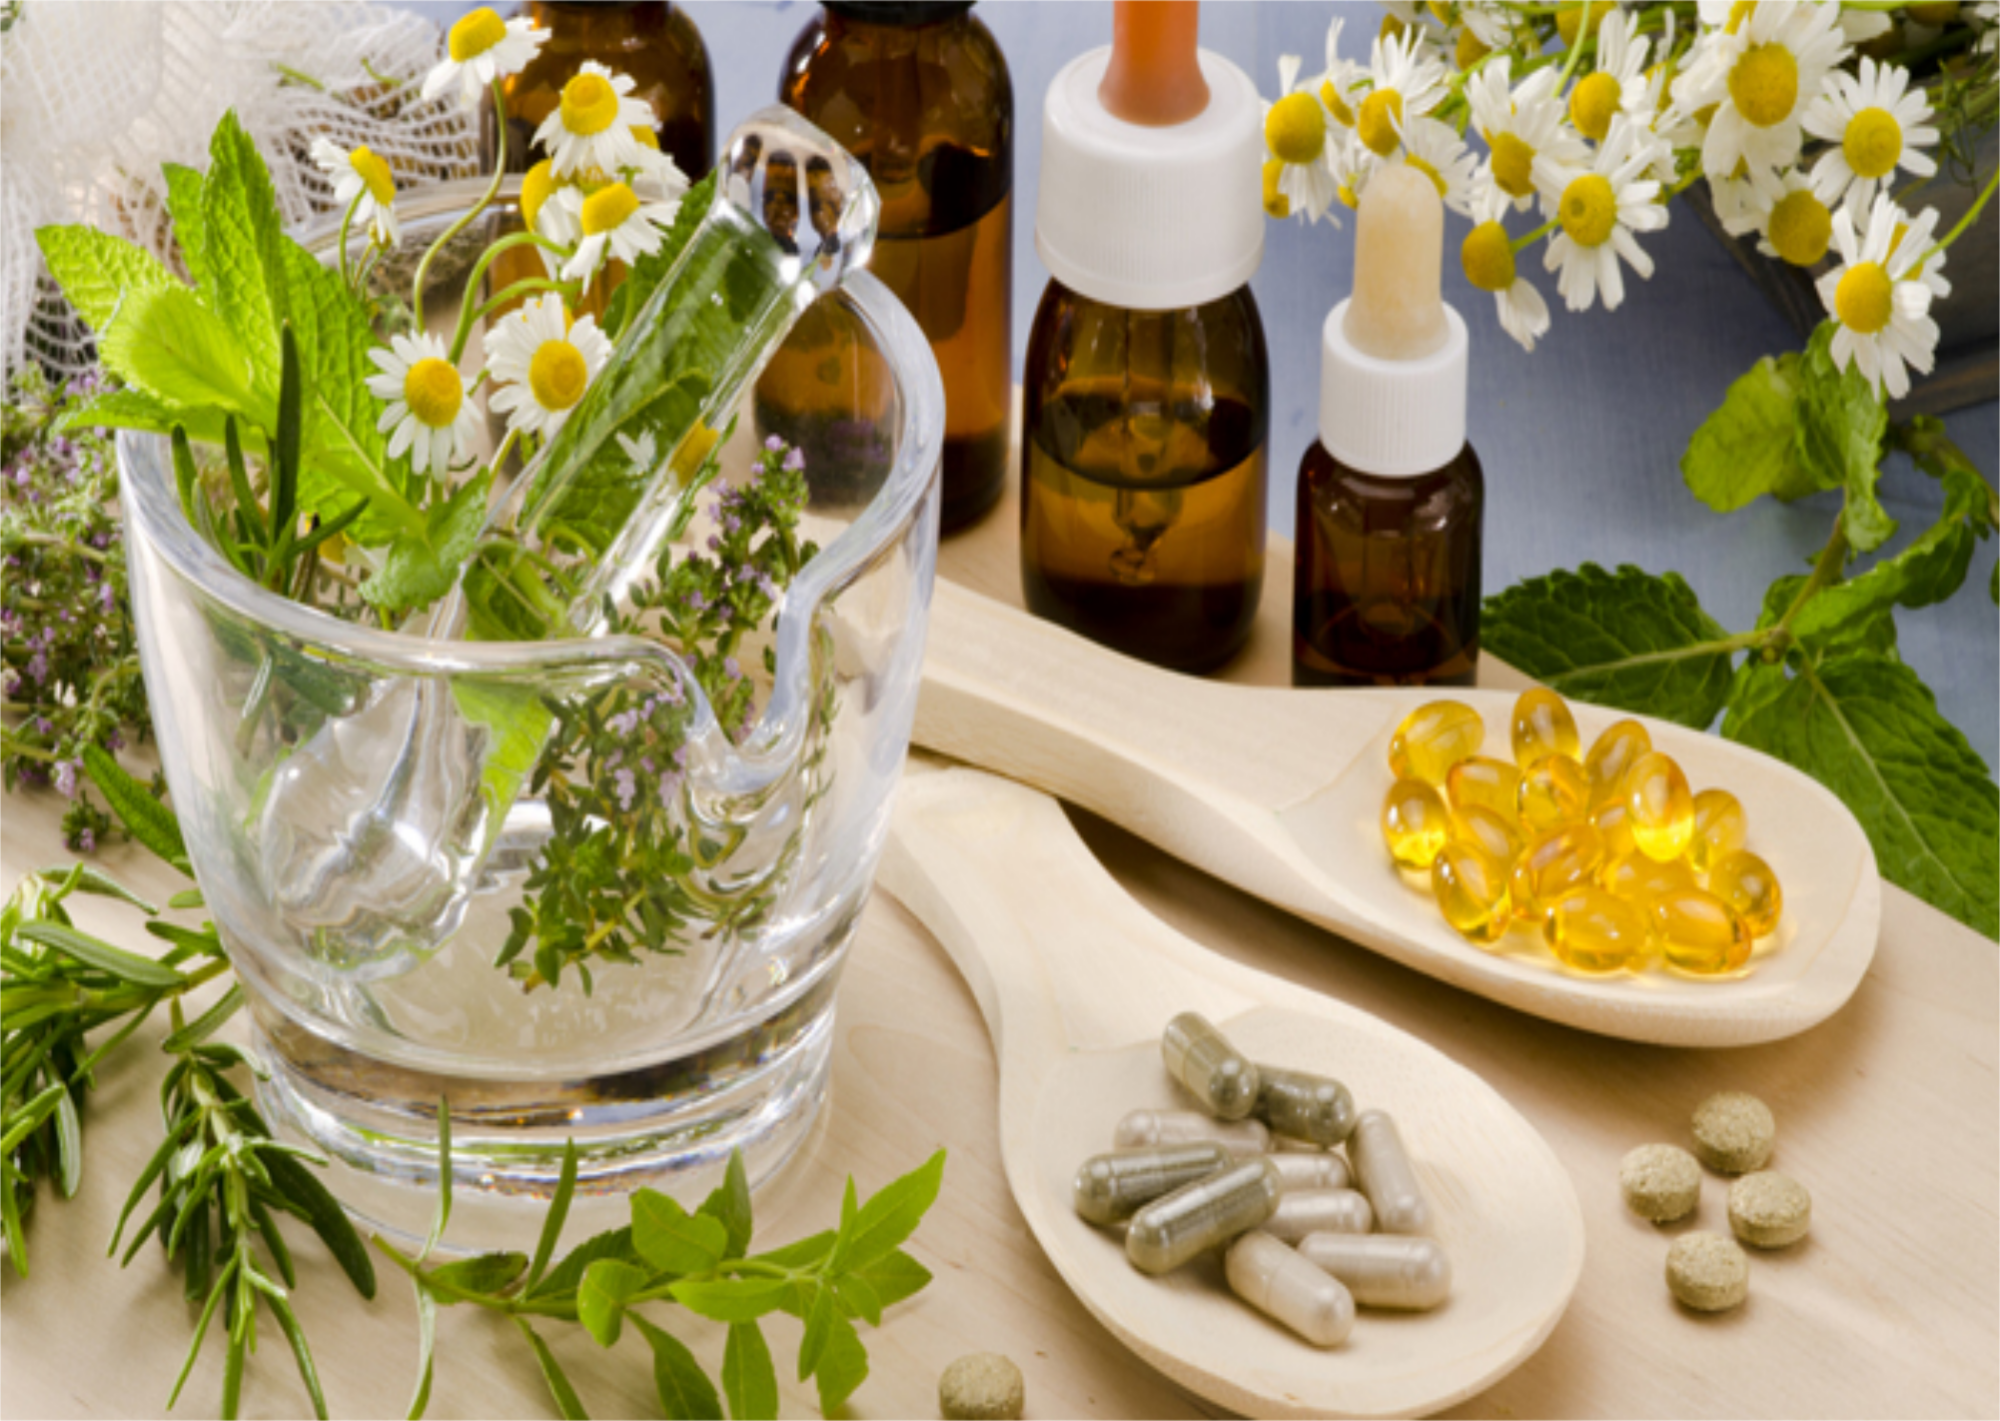 Народная медицина рук. Лечебные травы. Травяные лекарства. Препараты из лекарственных растений. Лекарственные растения и фитопрепараты.